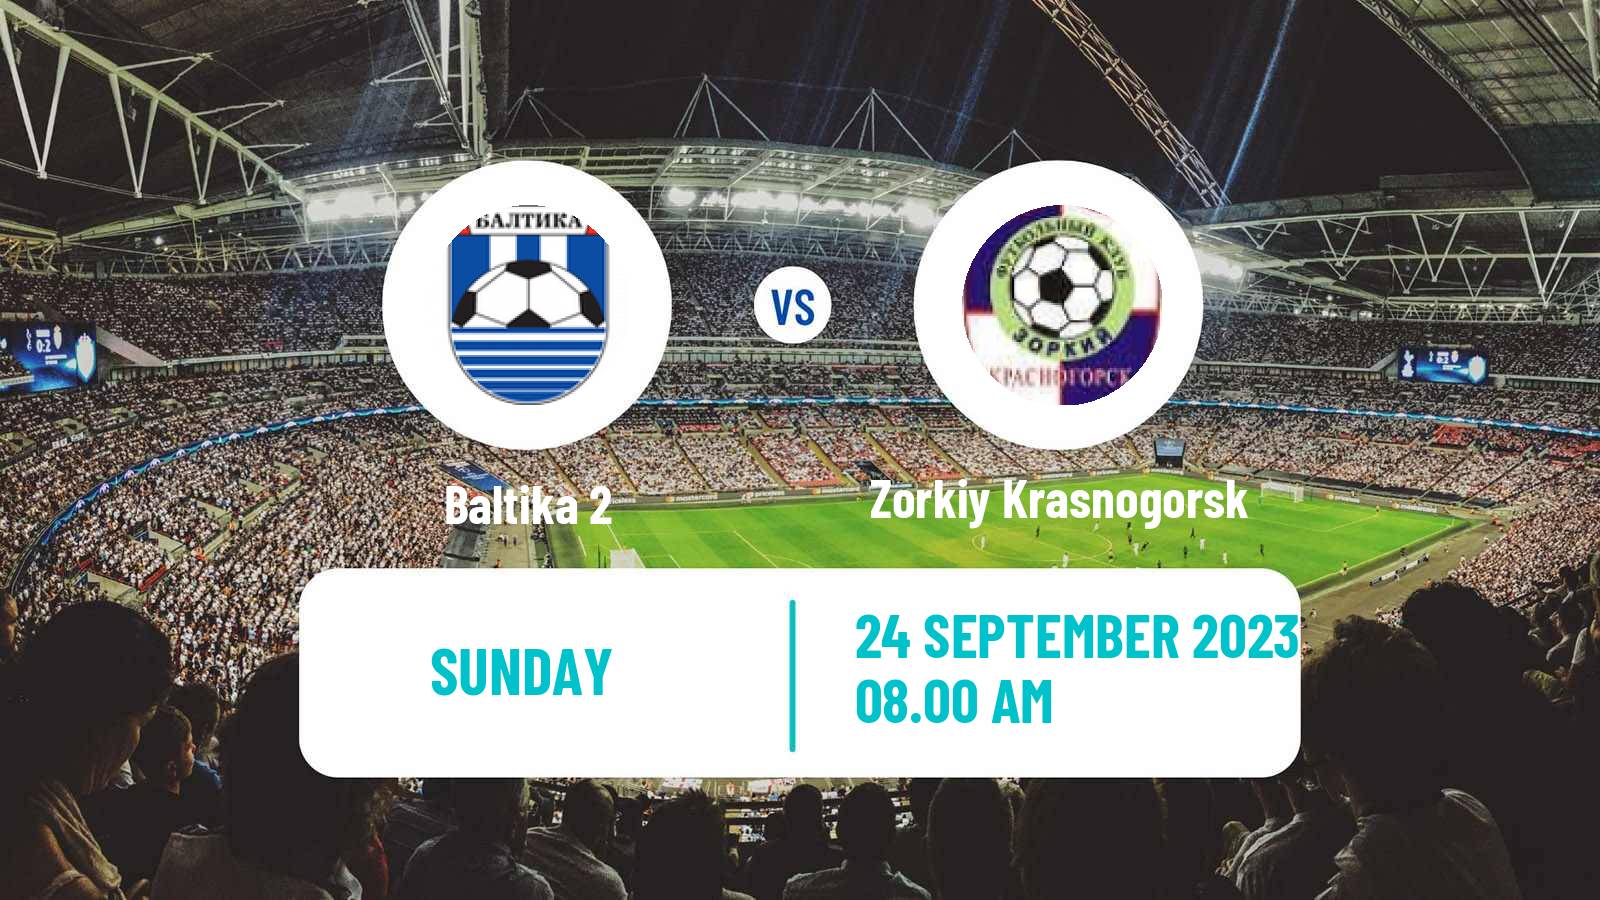 Soccer FNL 2 Division B Group 2 Baltika 2 - Zorkiy Krasnogorsk